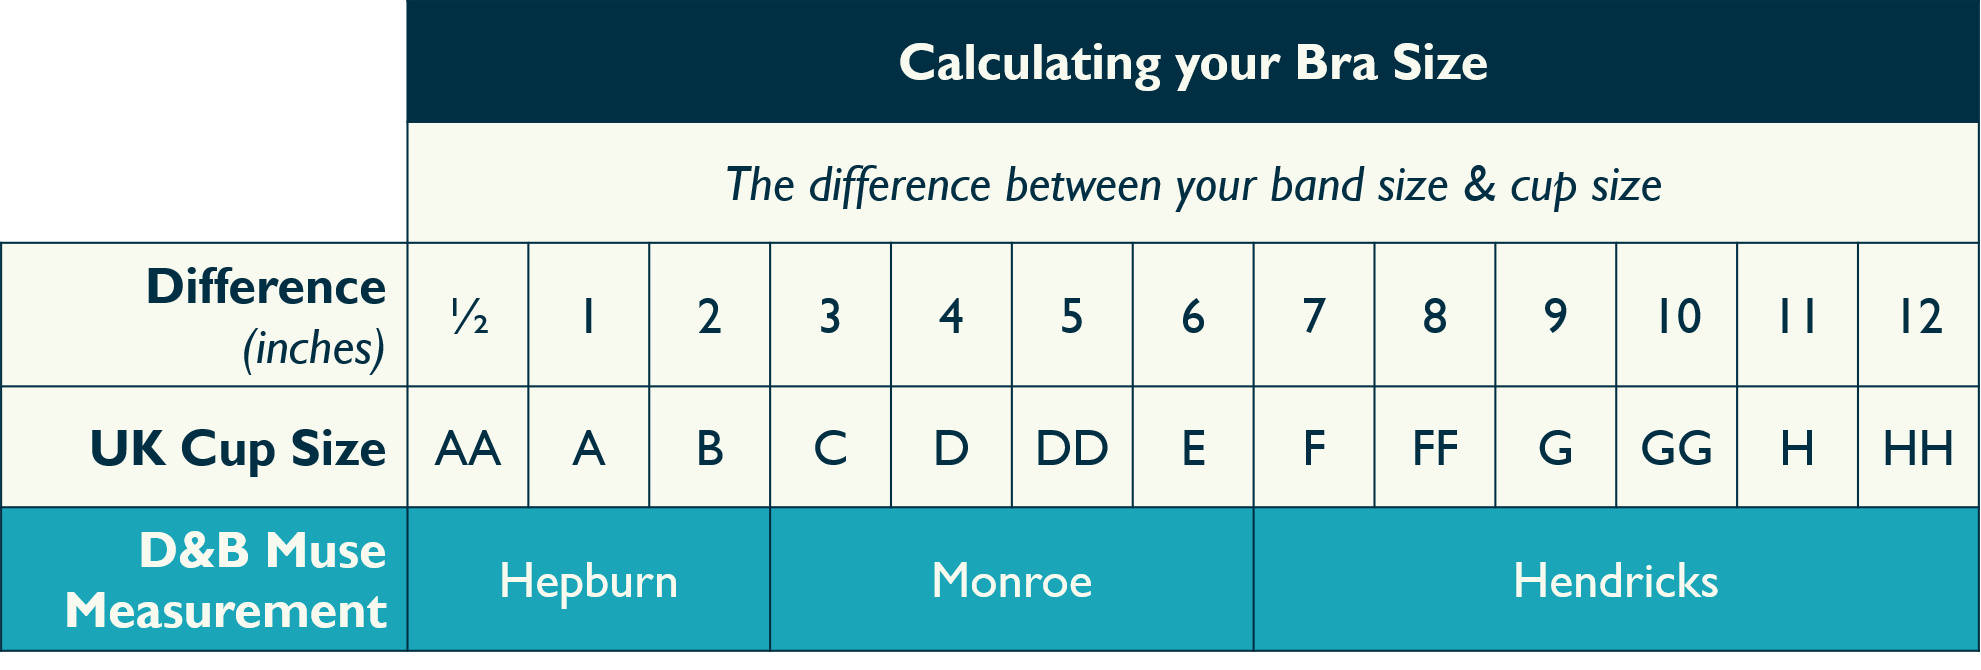 bra size calculator in inches